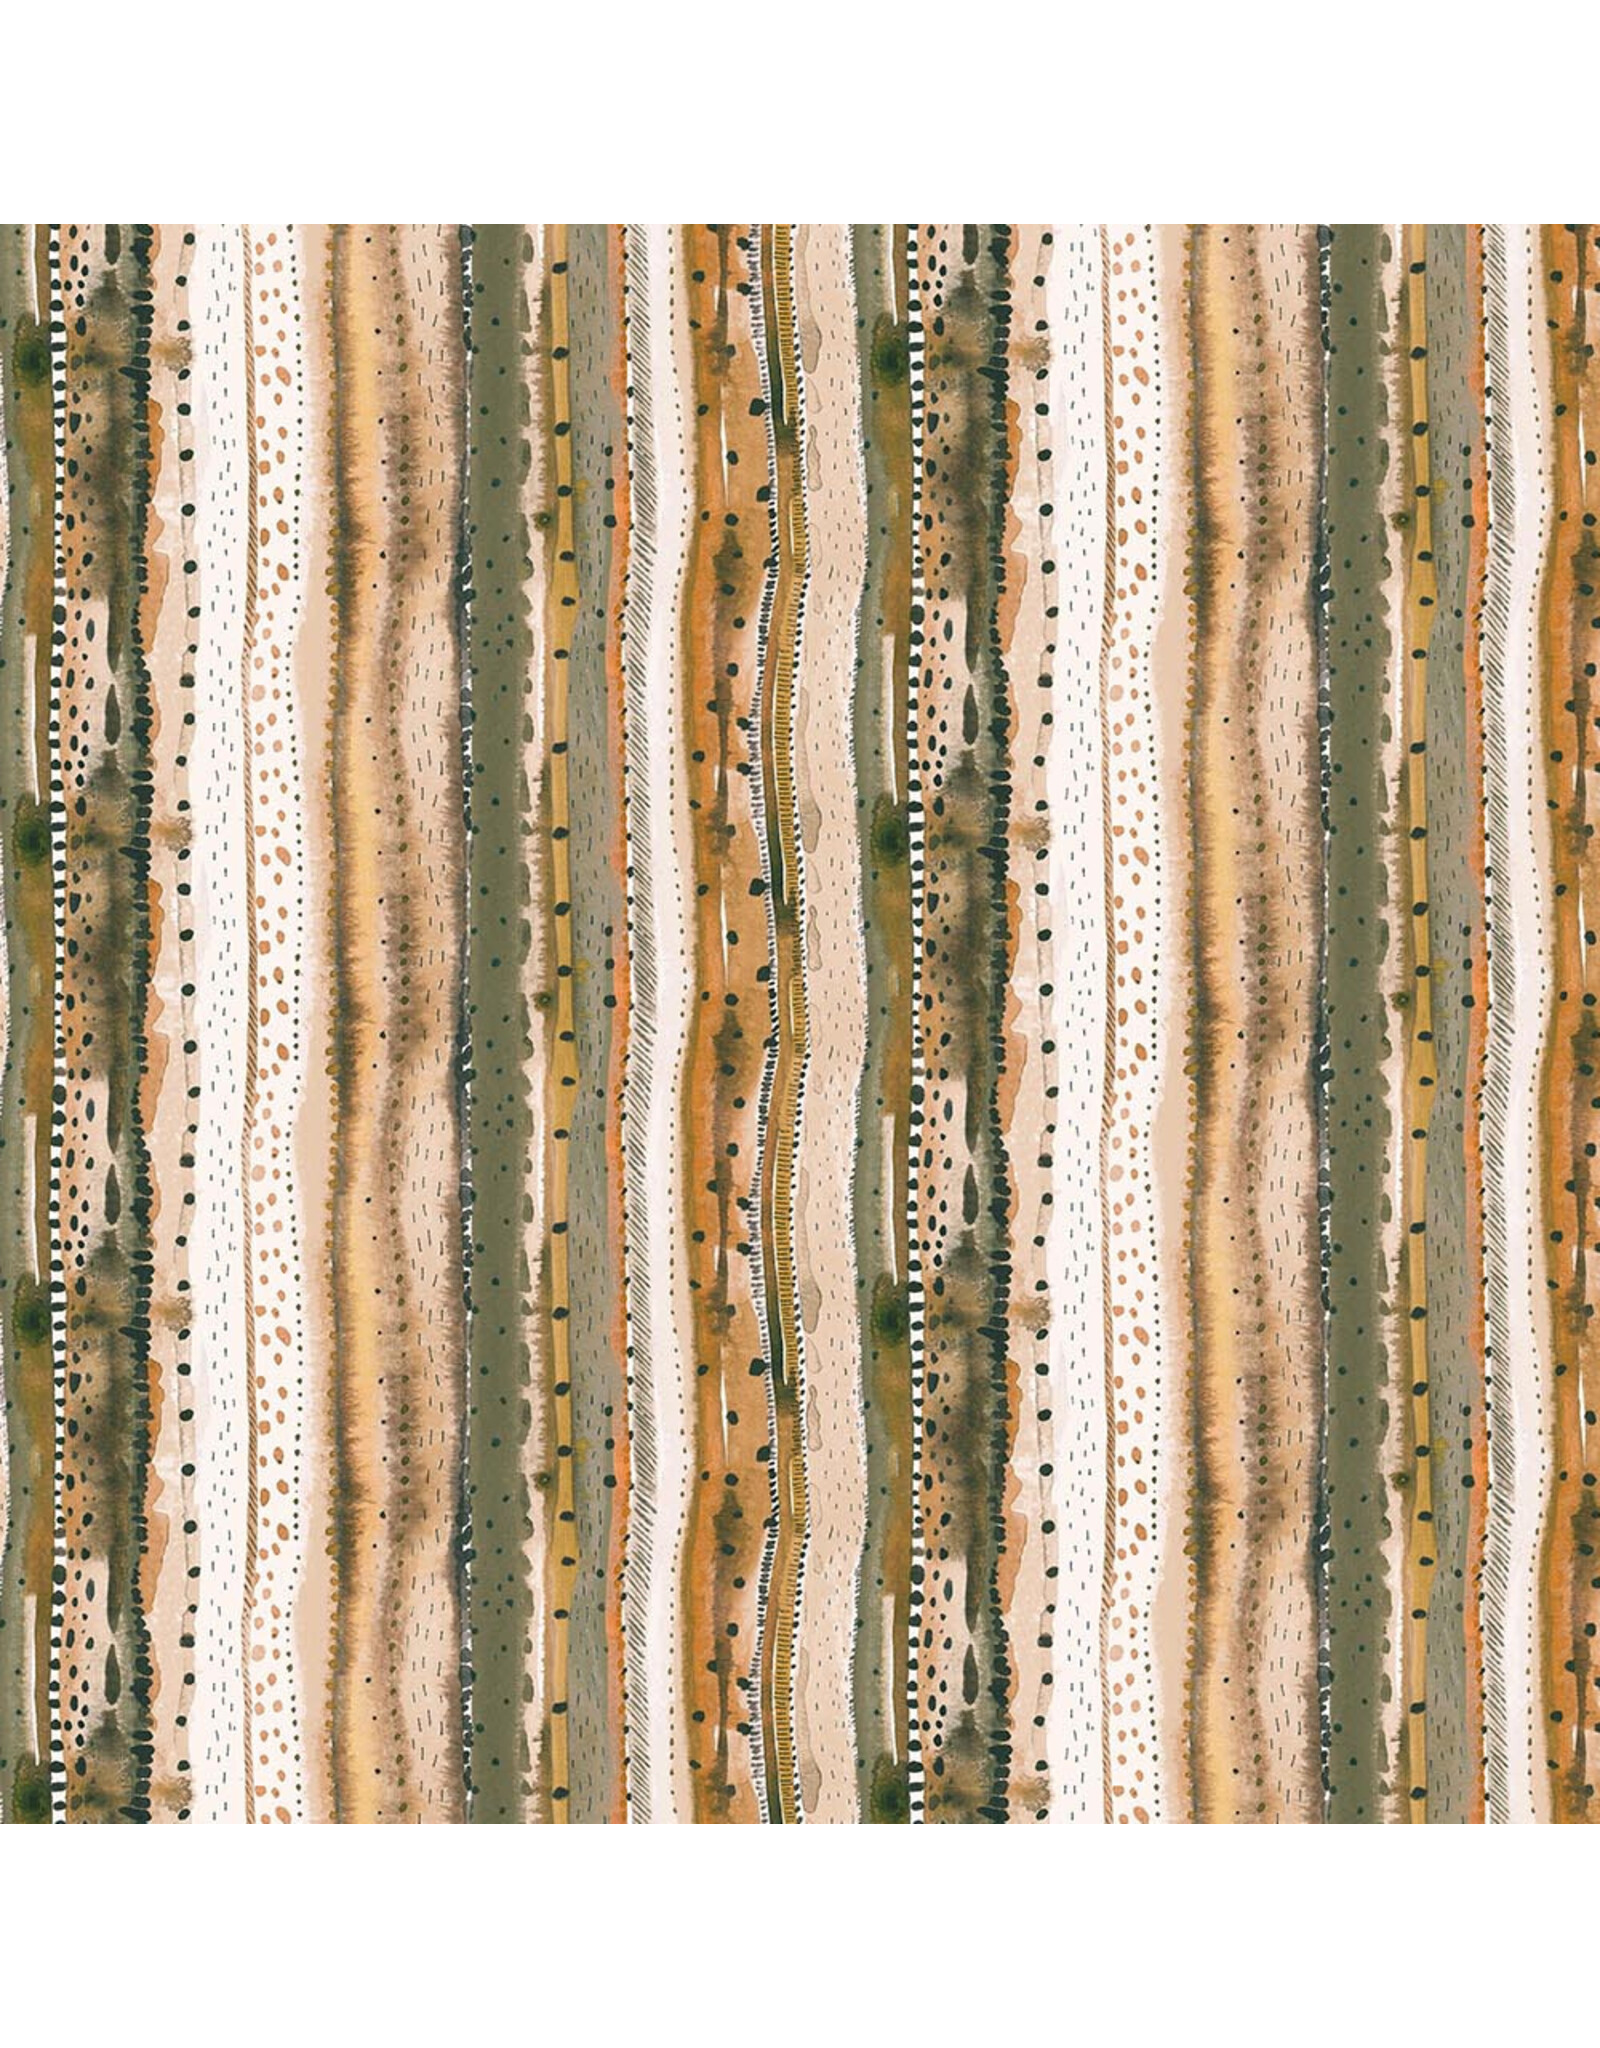 Figo Autumn Forage, Stripes in Gold, Fabric Half-Yards